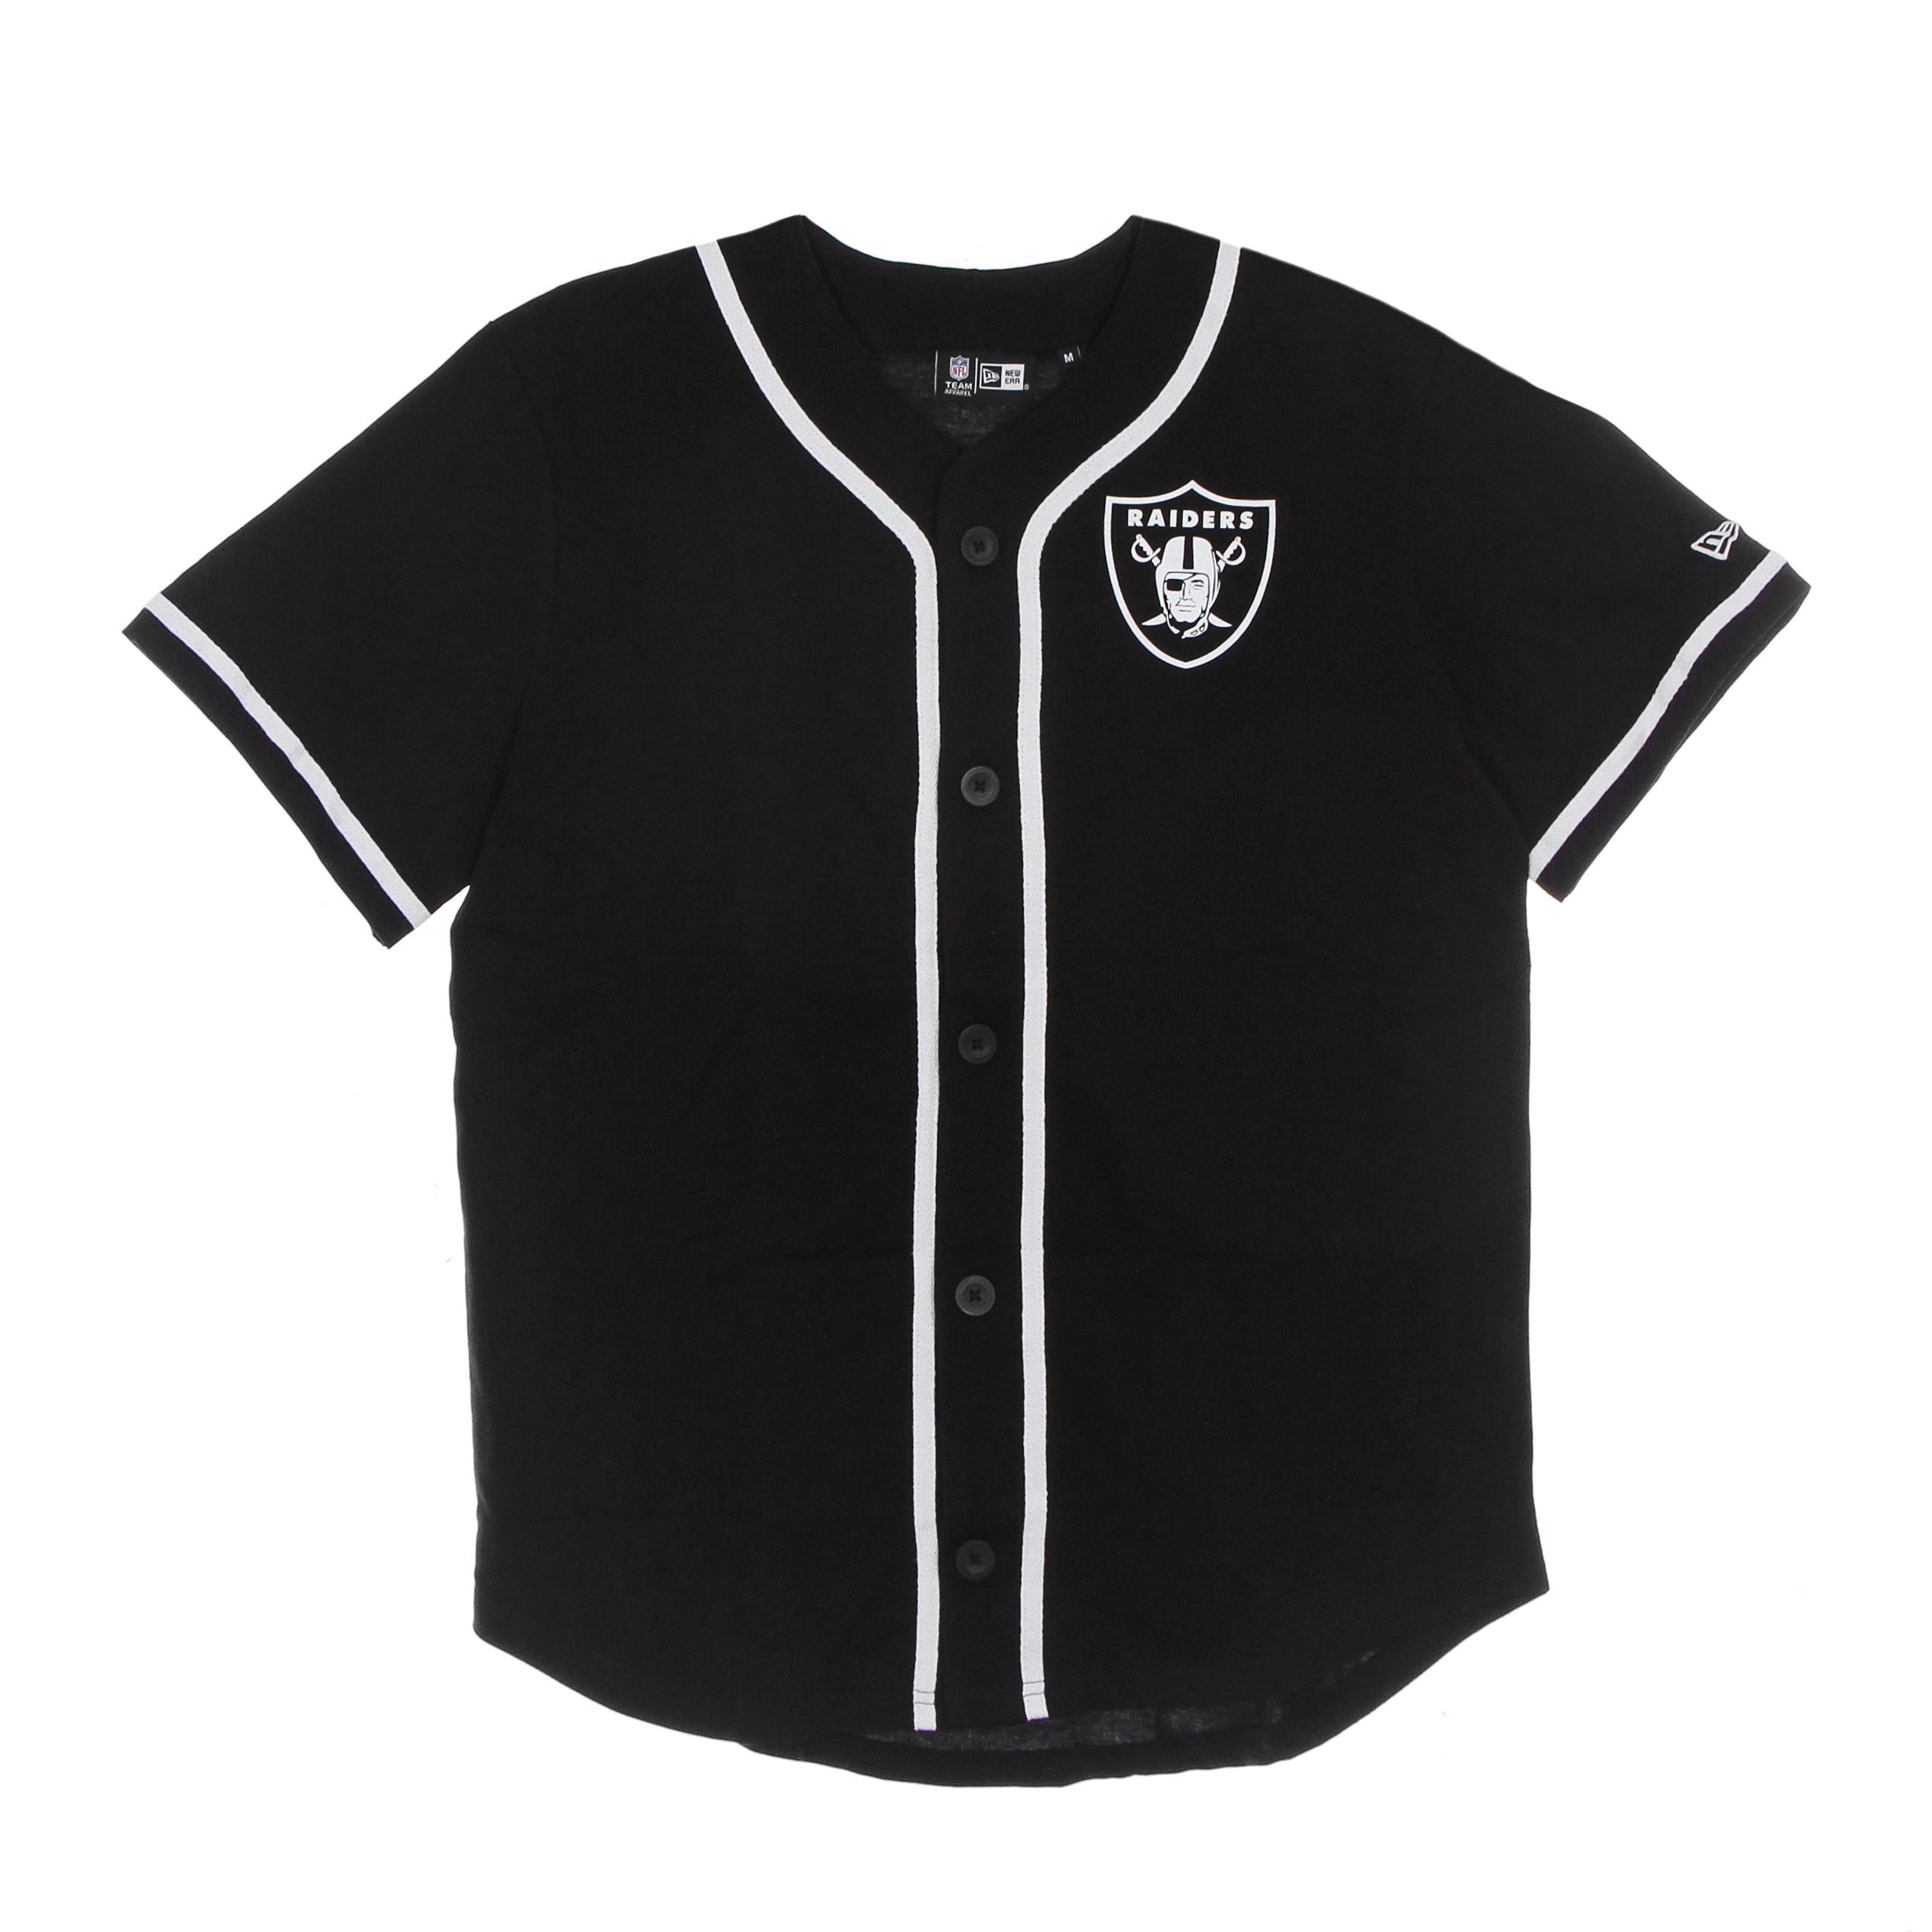 Men's Button Jacket Nfl Distressed Logo Button Up Tee Lasrai Black